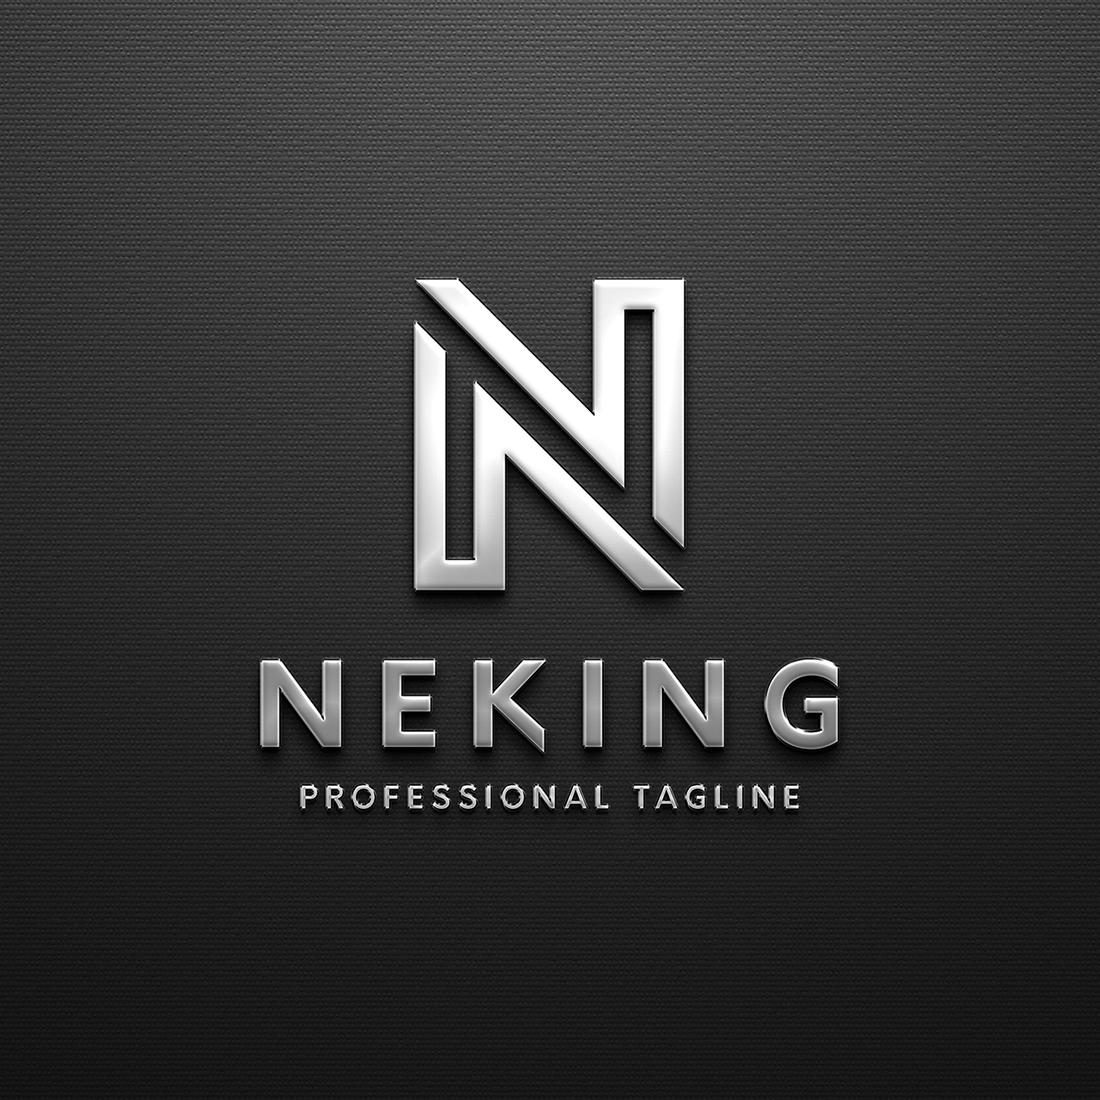 Logo for a professional tagline company.